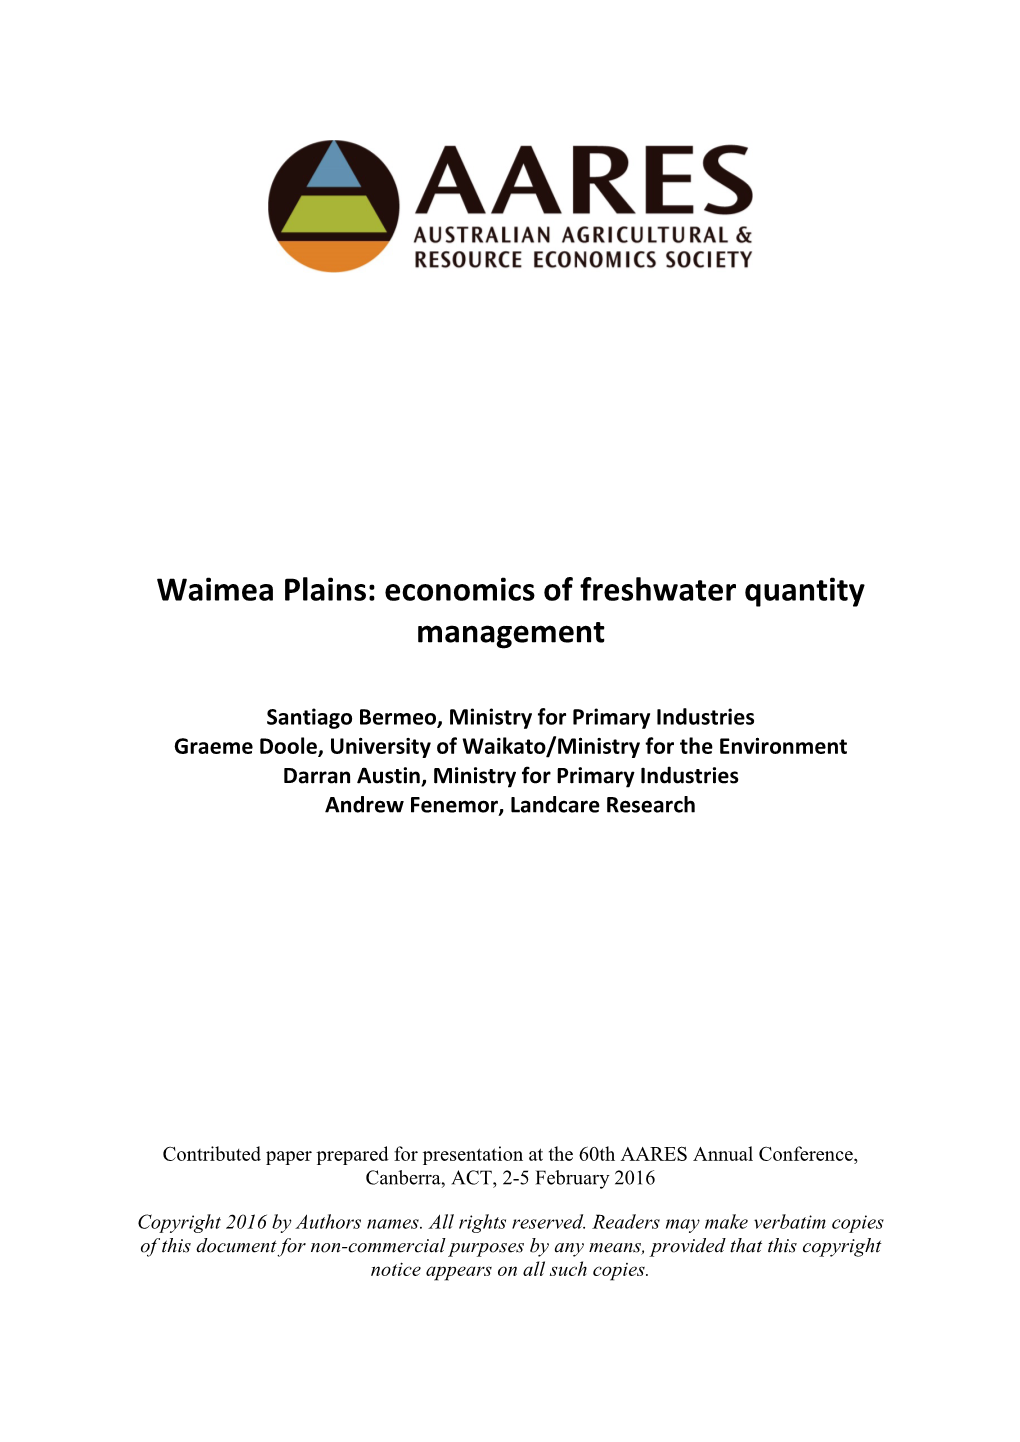 Waimea Plains: Economics of Freshwater Quantity Management